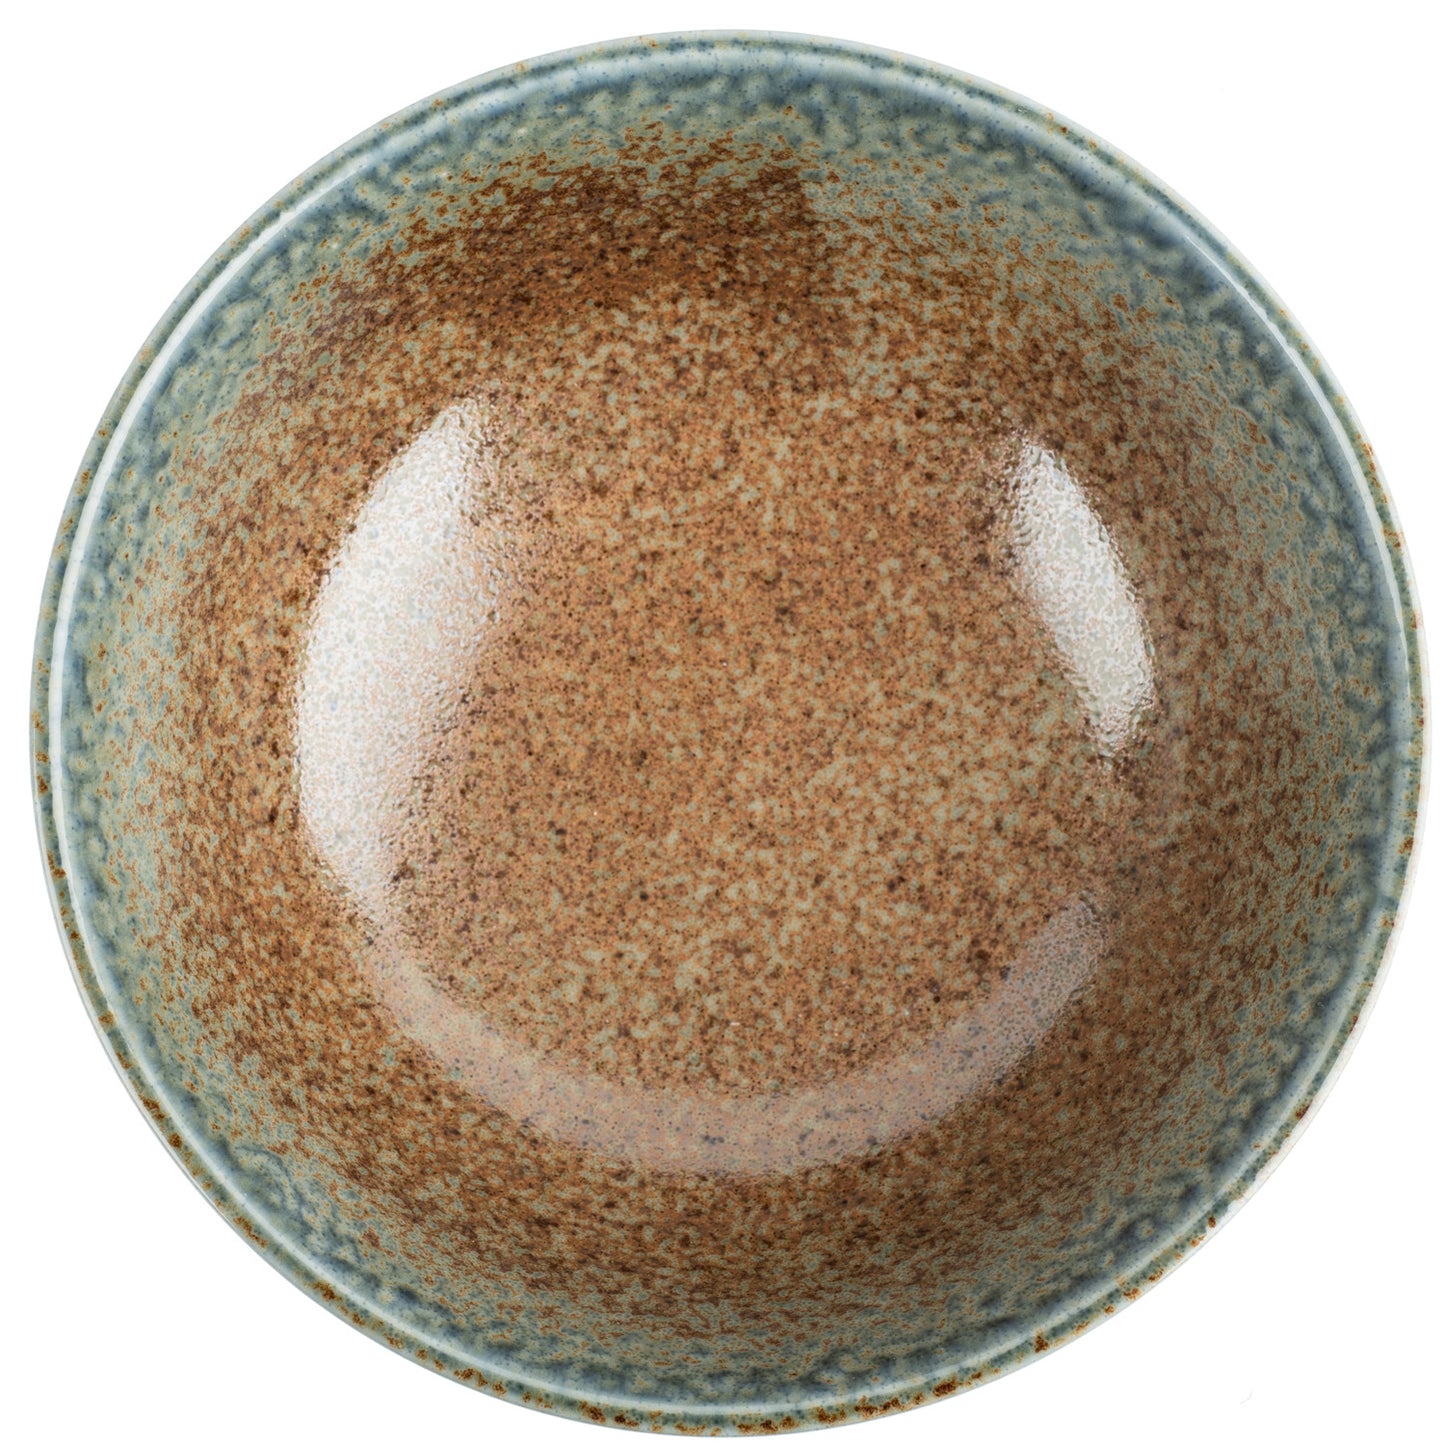 Aki Ceramic Japanese Ramen Bowl top